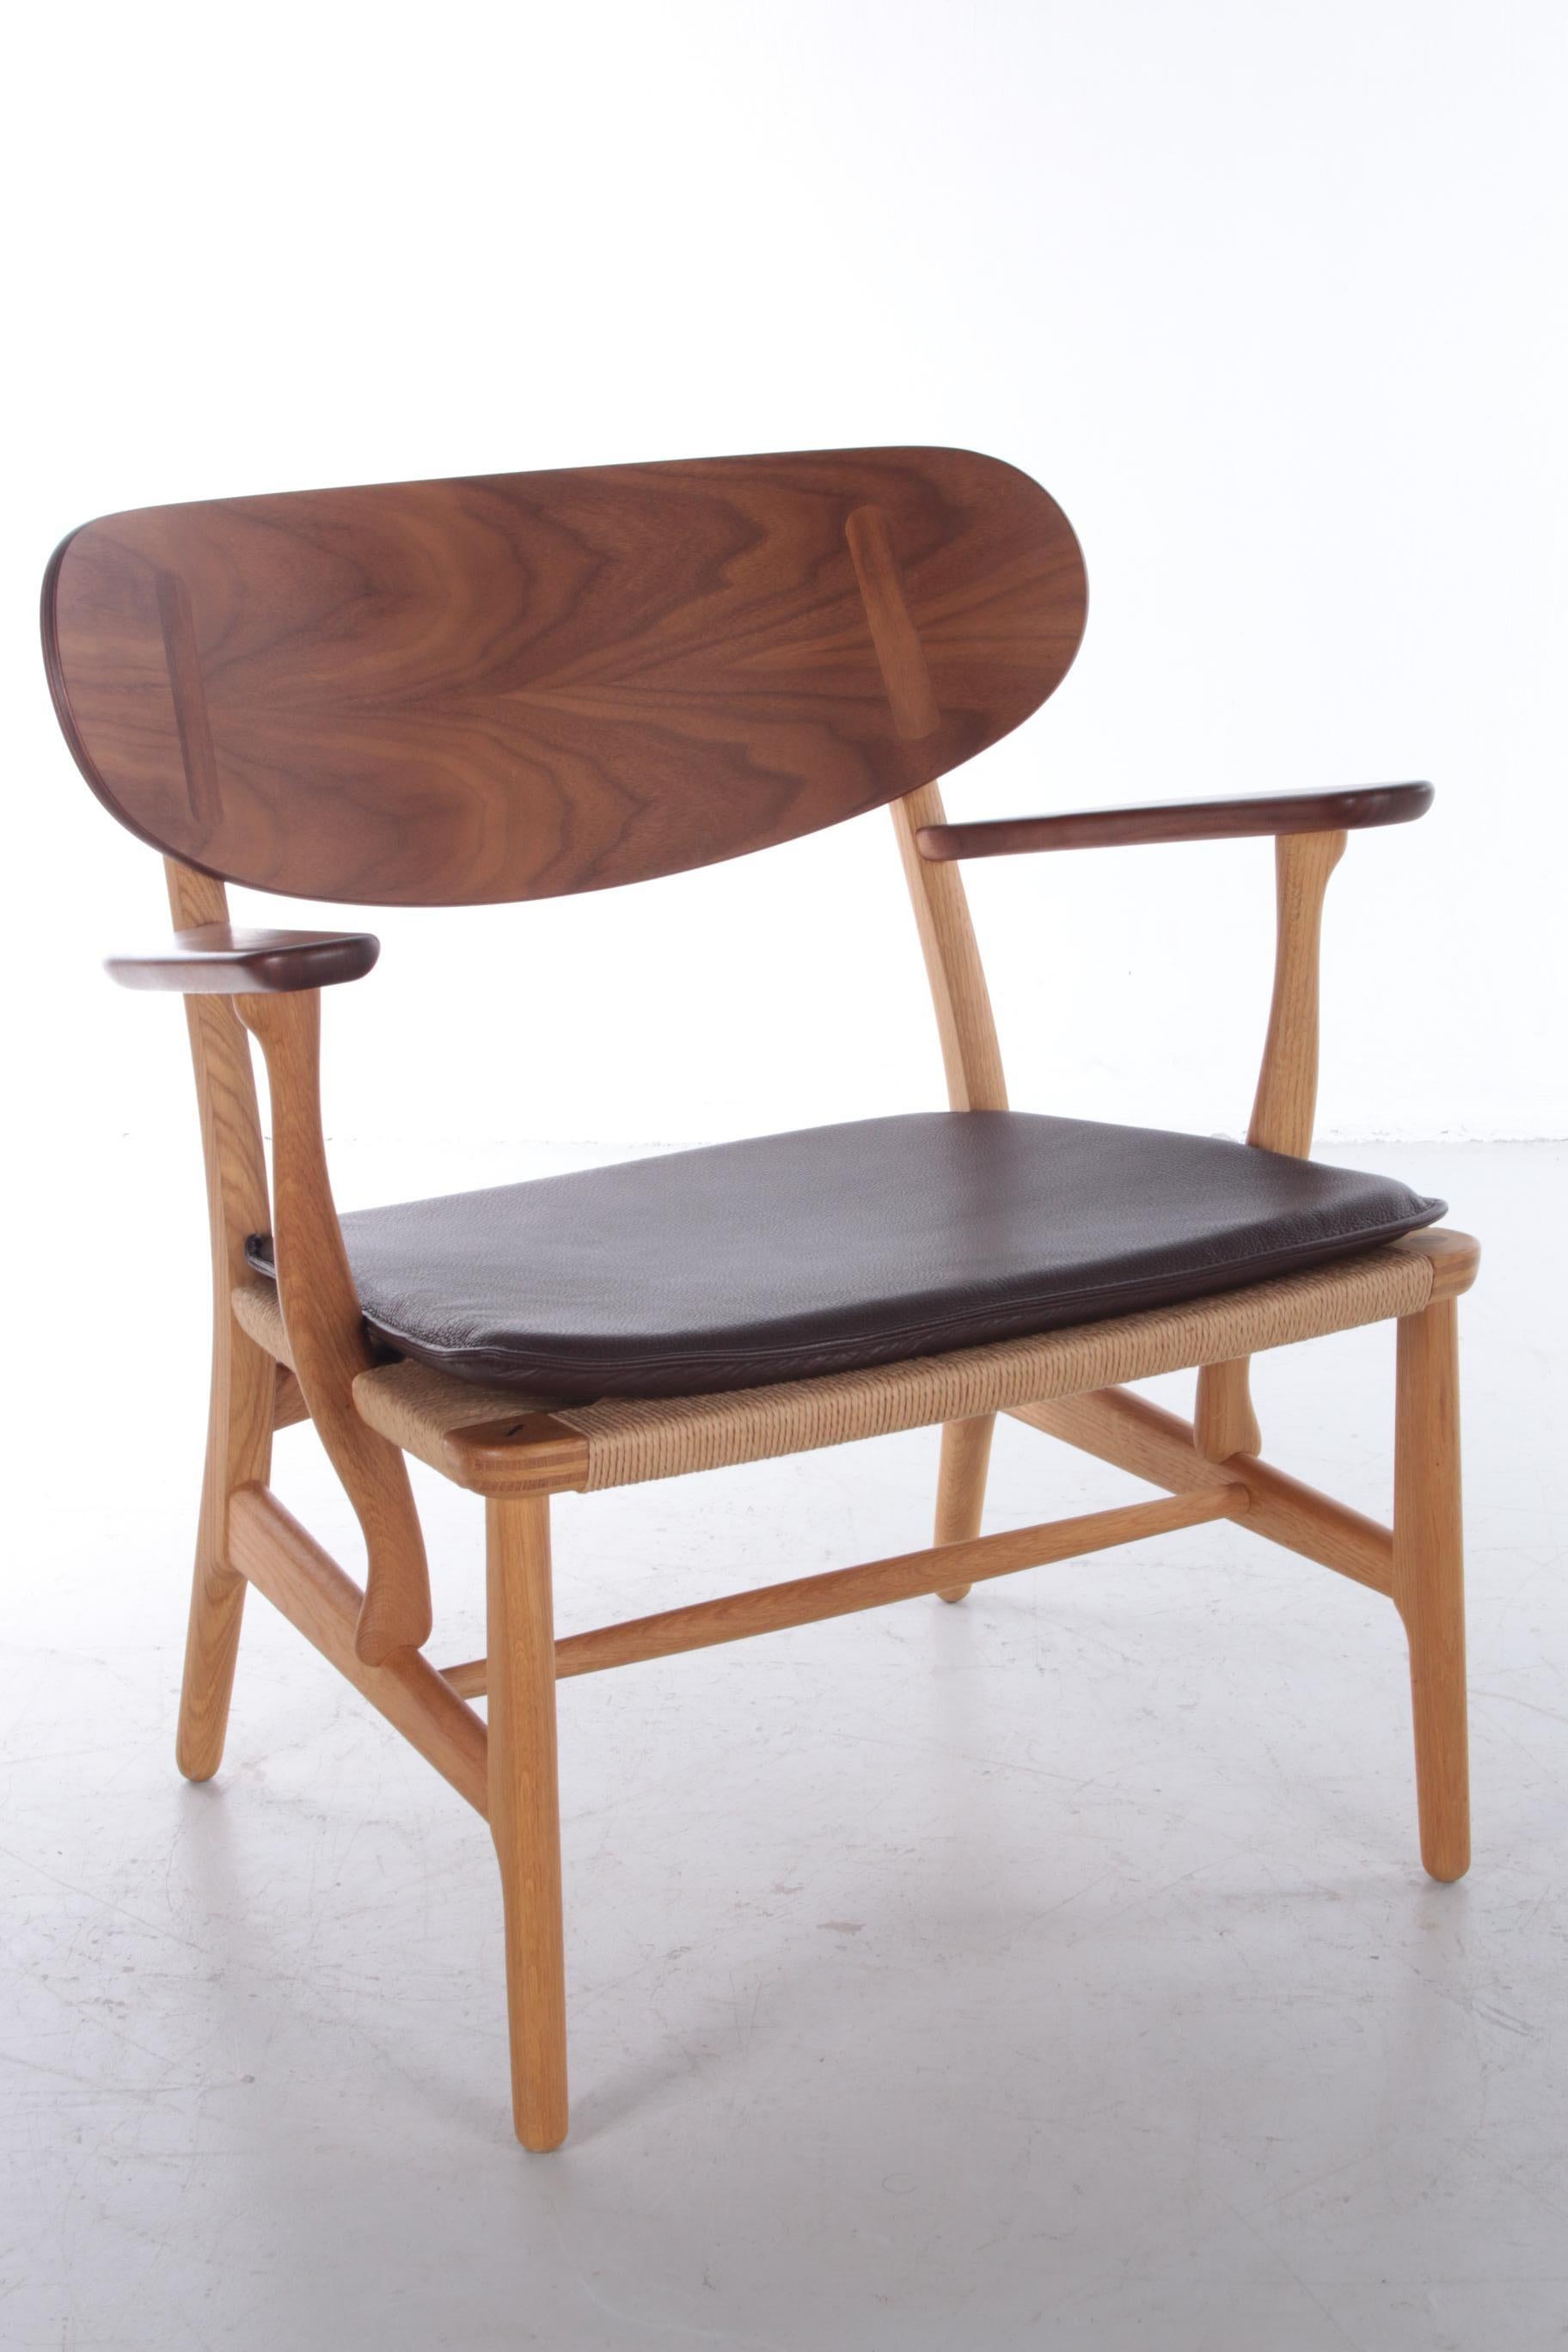 Mid-Century Modern Model Ch22 Lounge Chair by Hans J. Wegner for Carl Hansen & Søn